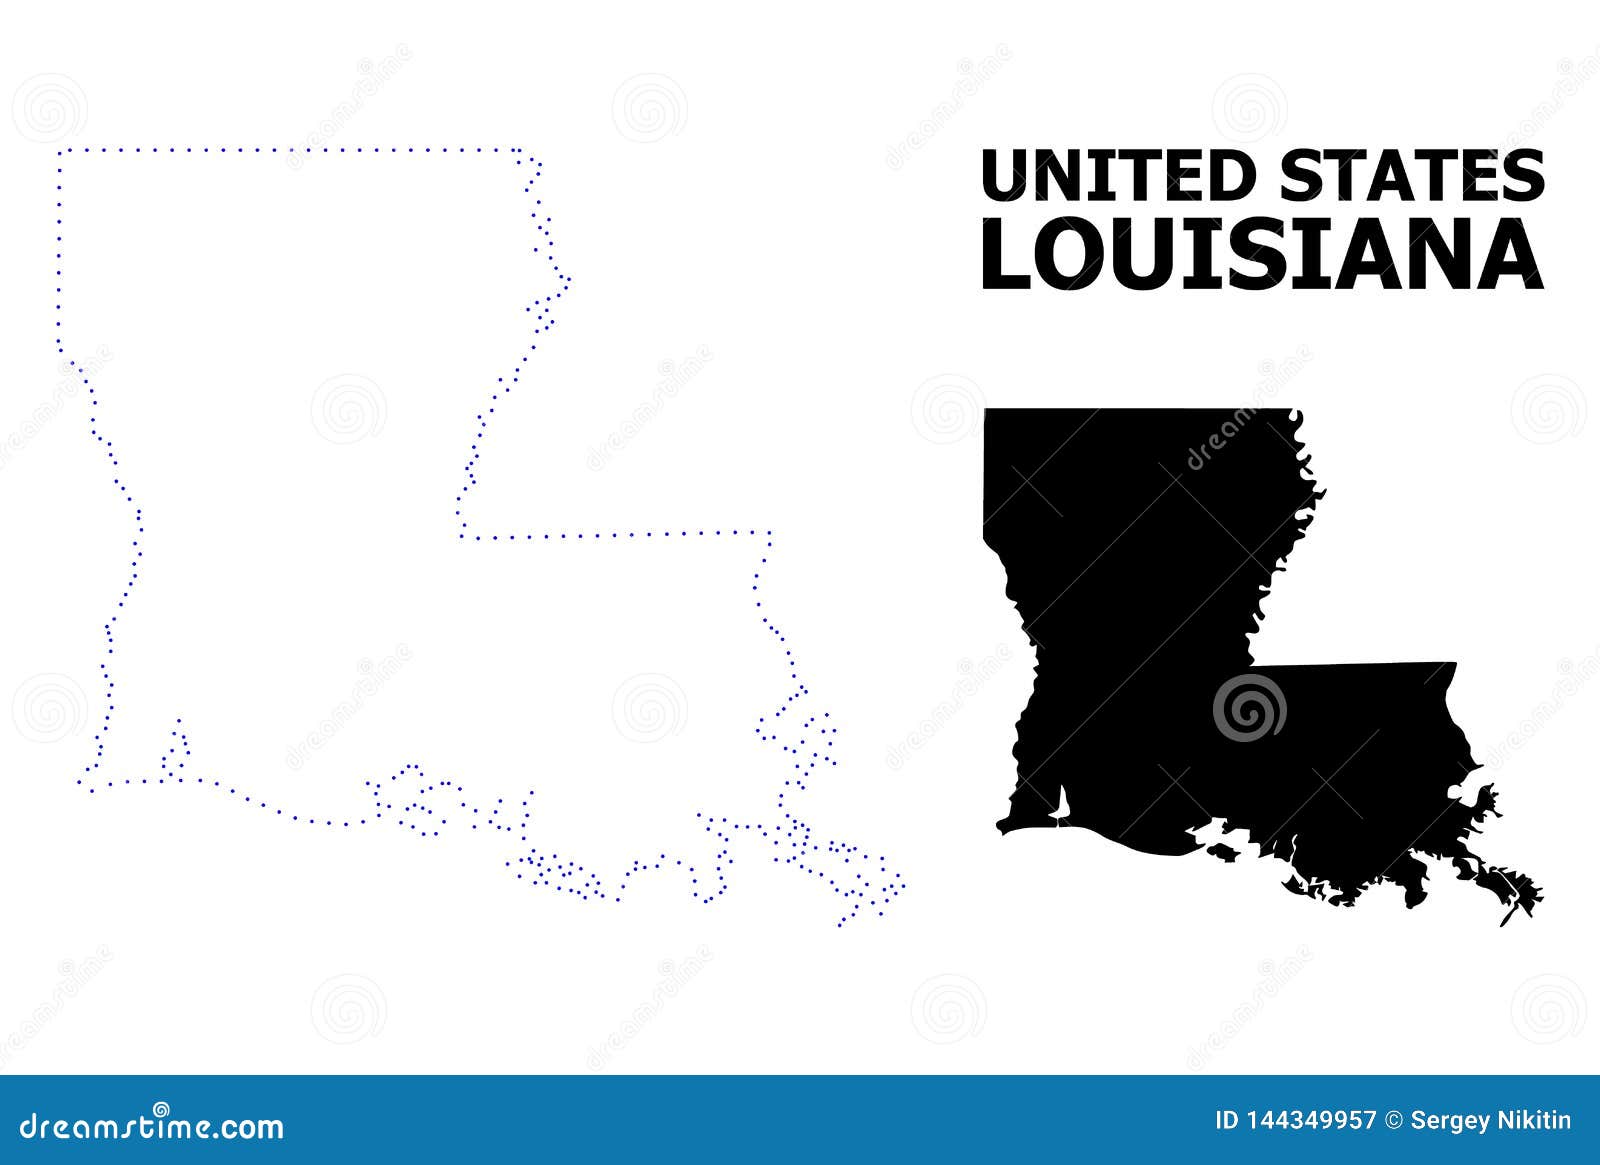 Map of Louisiana Template